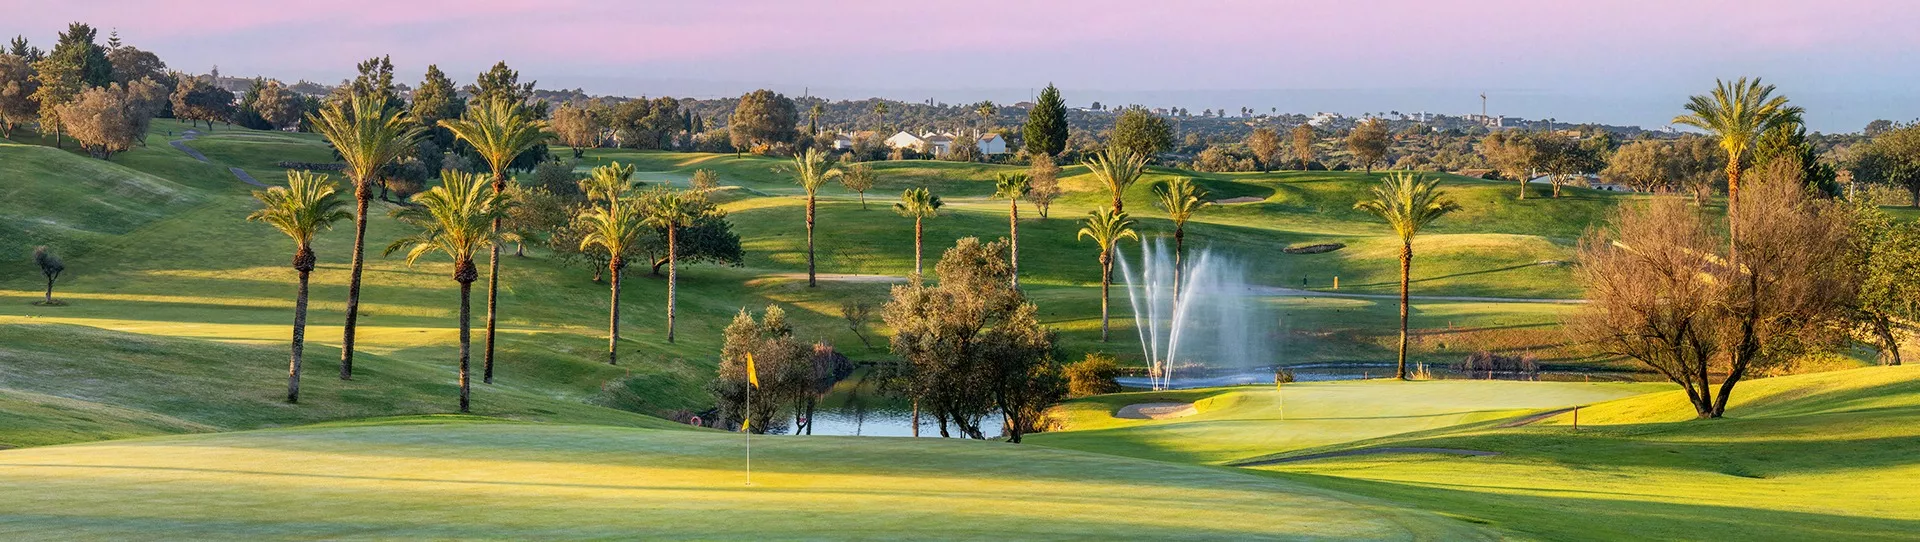 Portugal golf courses - Gramacho Golf Course - Photo 1